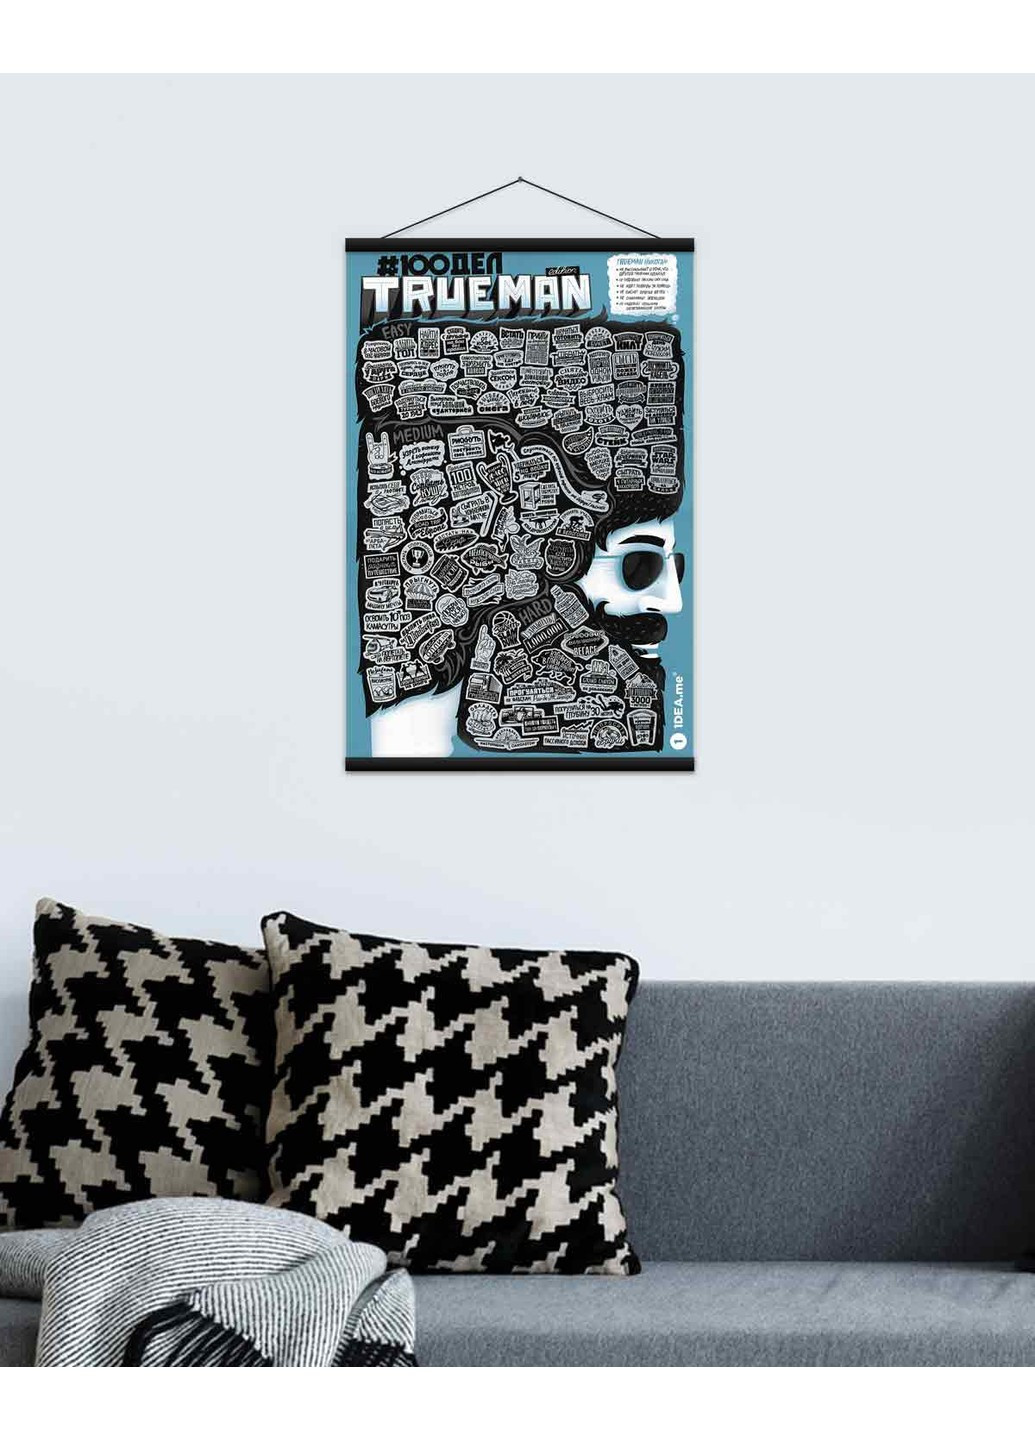 Скретч постер "#100ДЕЛ TRUEMAN edition" (тубус) 1DEA.me (254288771)